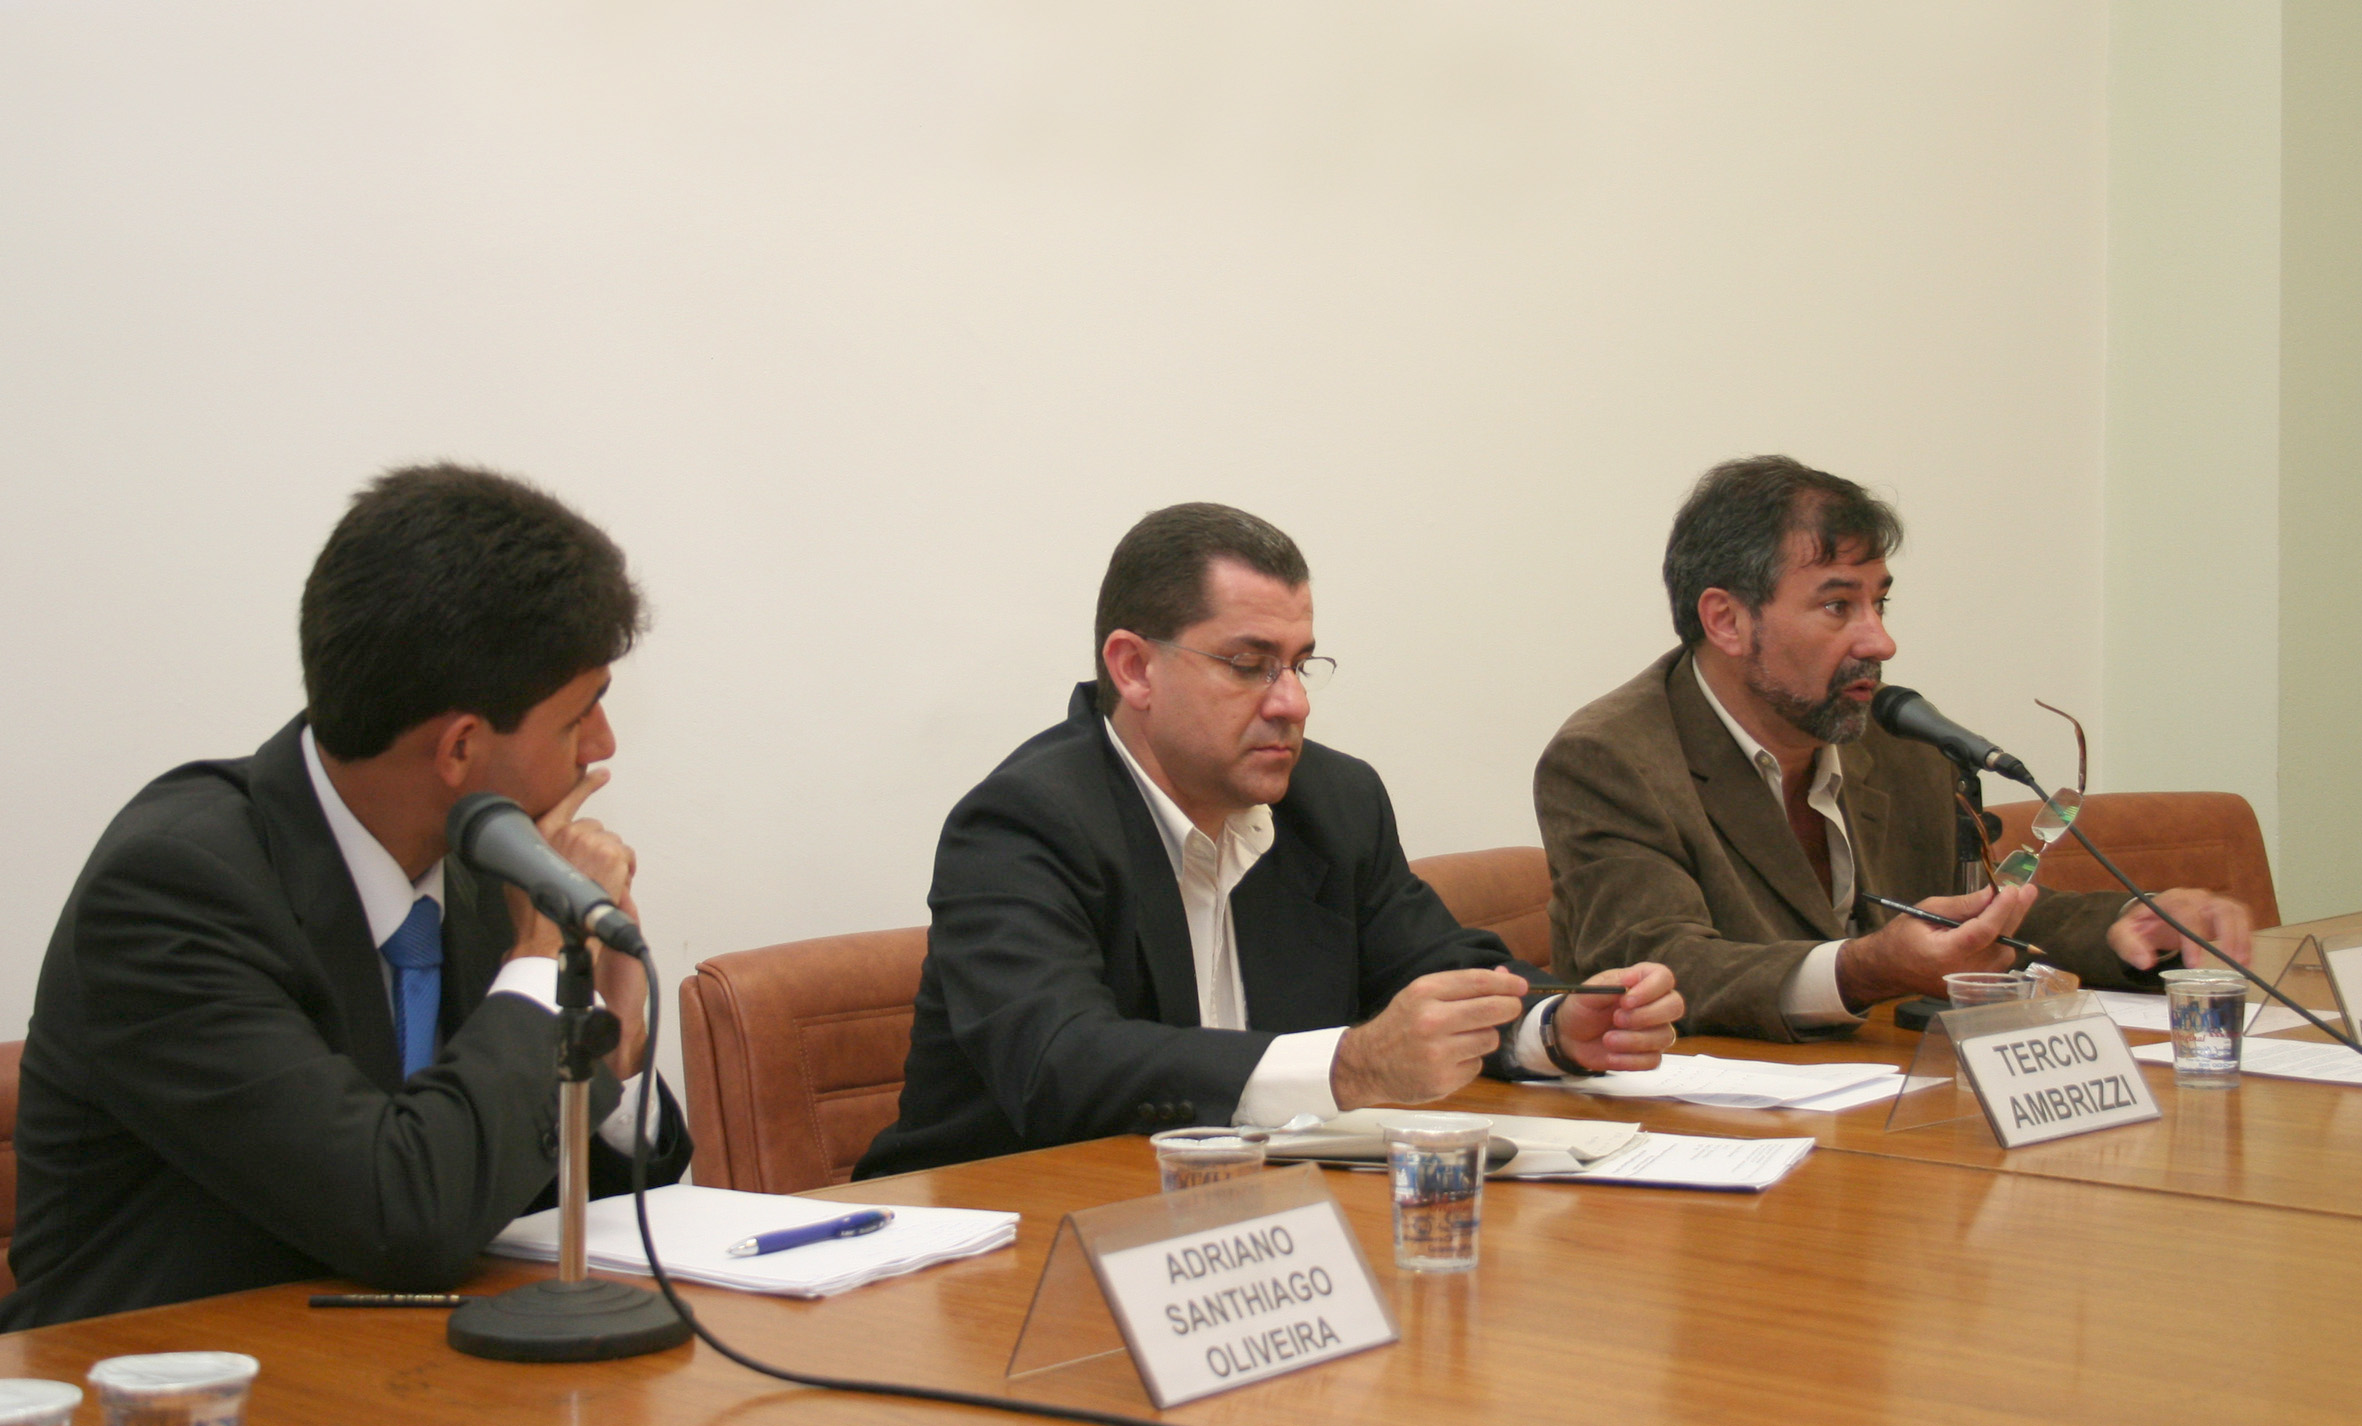 Adriano Santhiago Oliveira, Tercio Ambrizzi e Paulo Artaxo